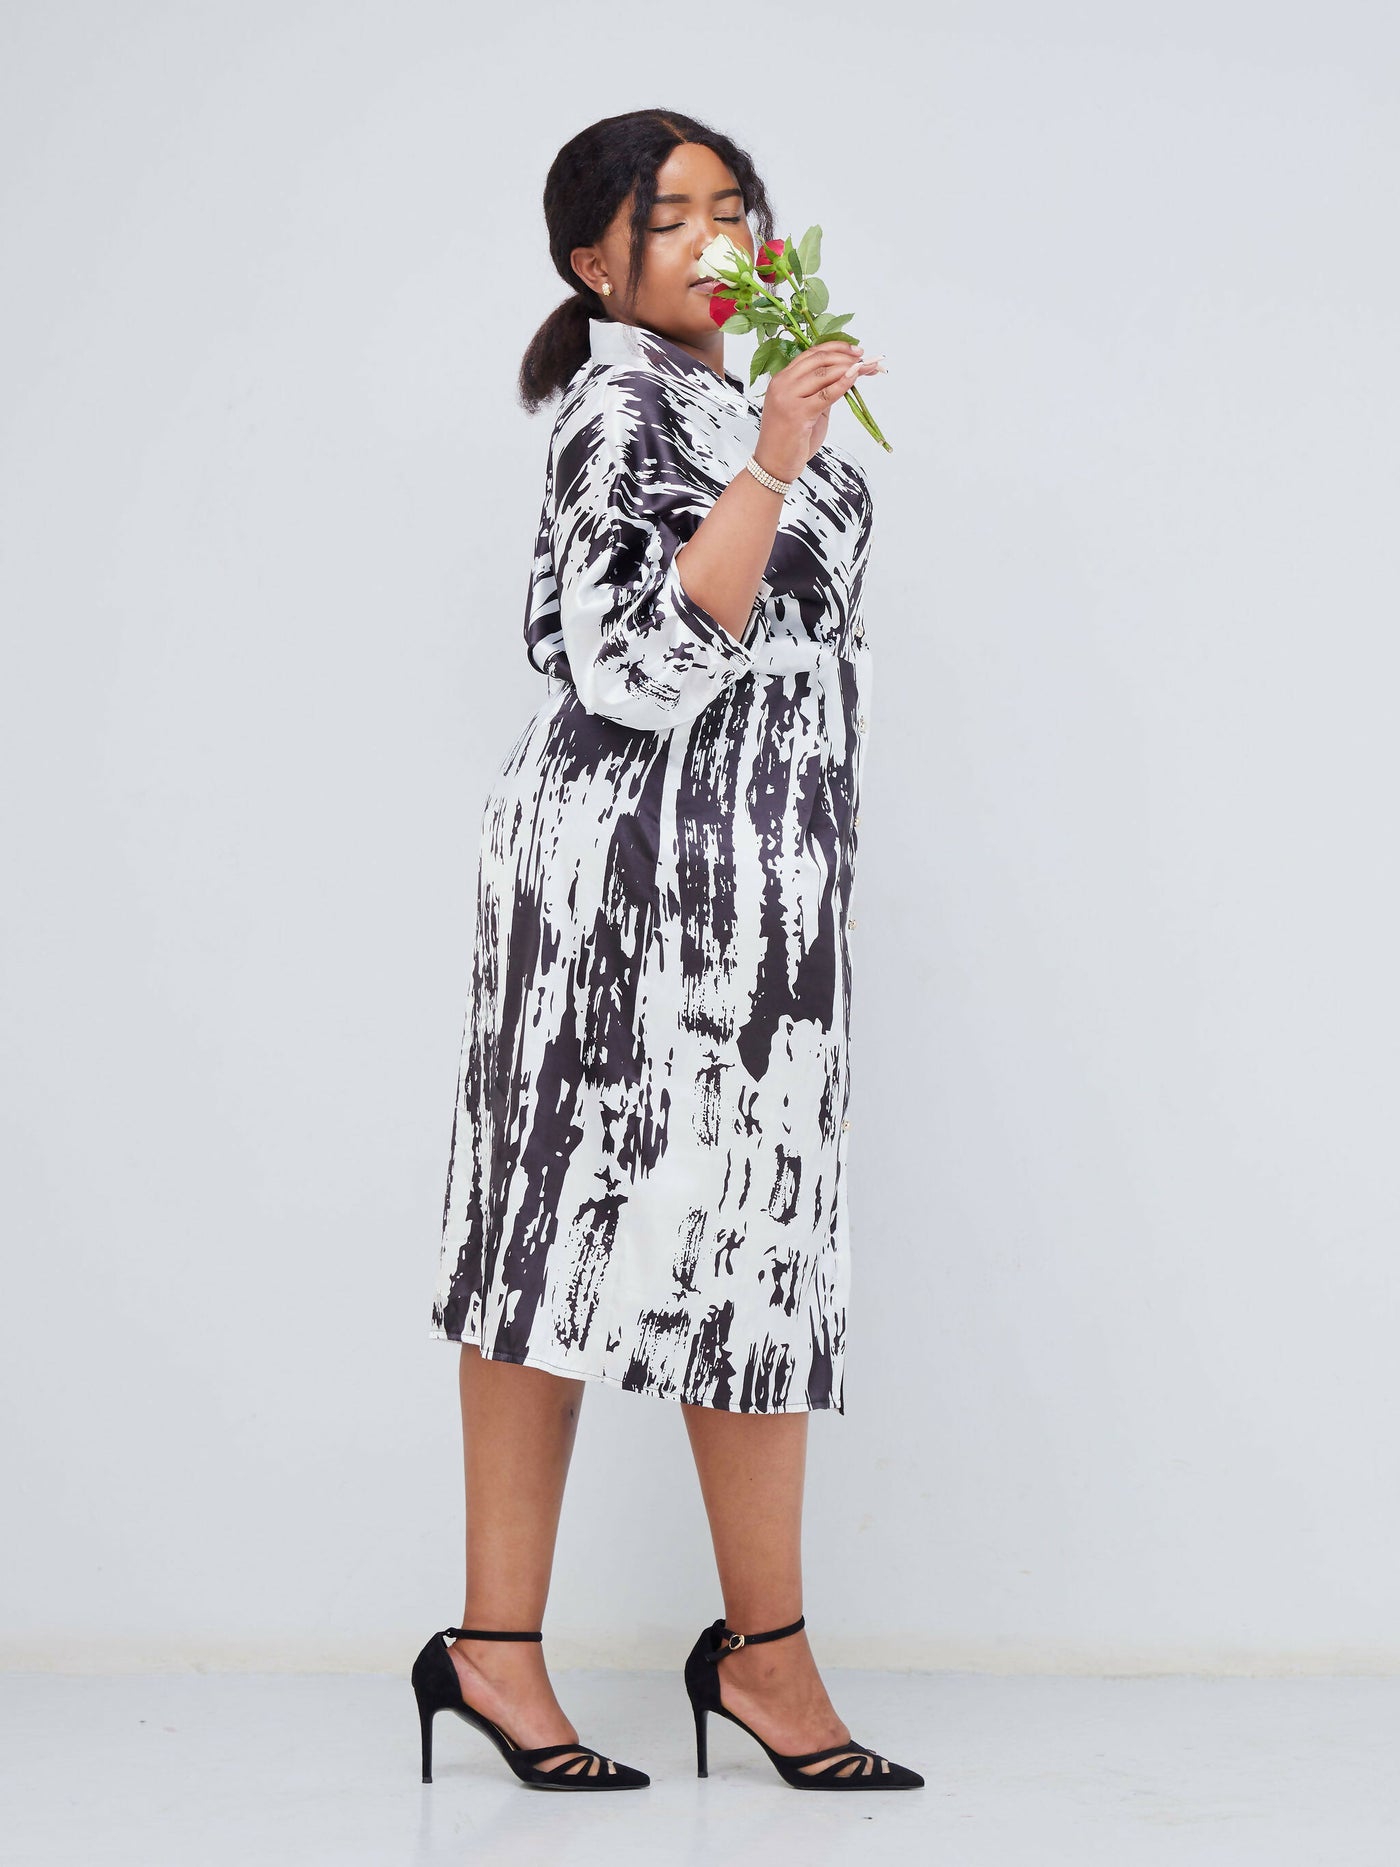 Miss Kerre Fashions Lila Rose Satin Ps Shirt Press Dress - Black / White